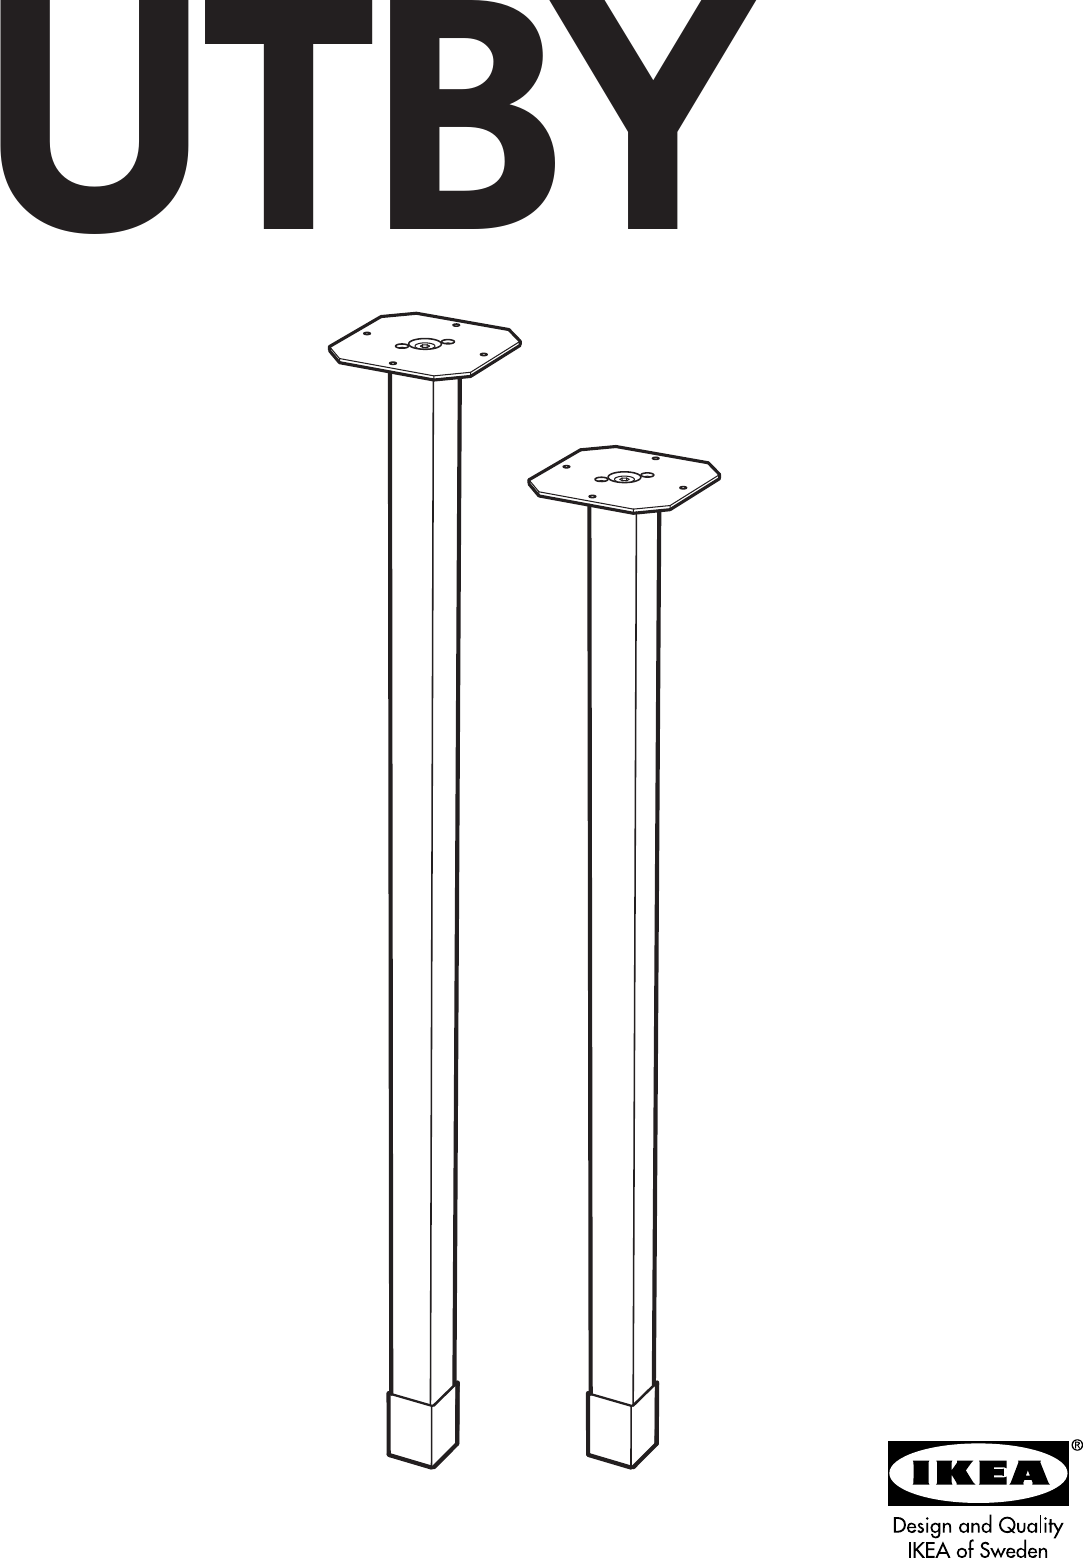 Page 1 of 8 - Ikea Ikea-Utby-Leg-35-3-8-Assembly-Instruction